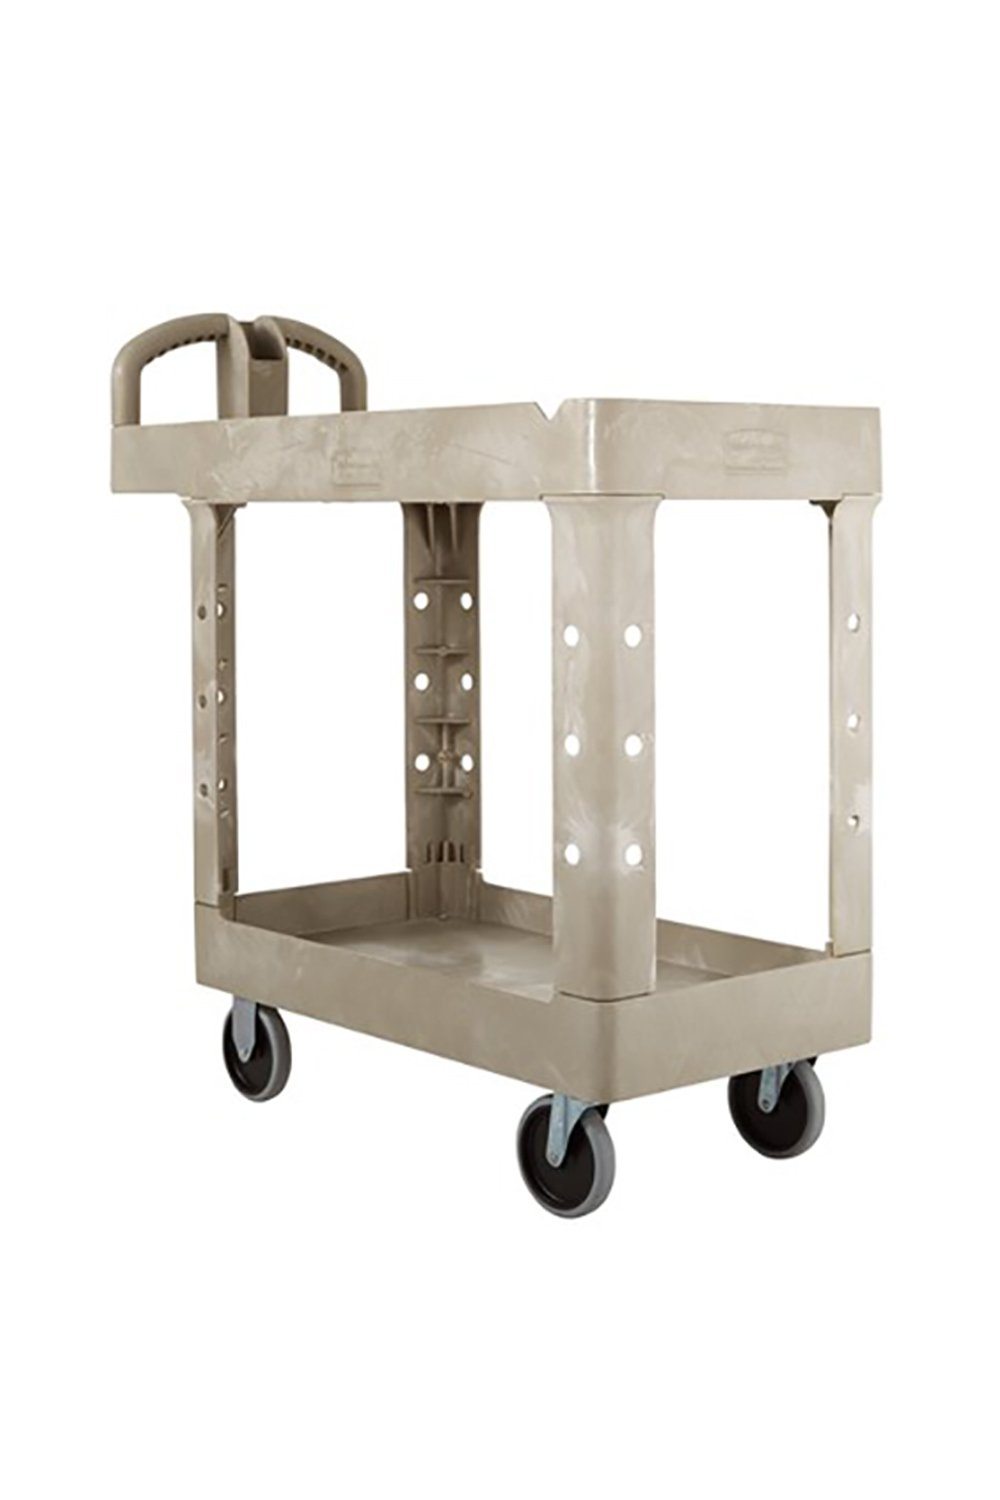 Lip-Shelf Utility Cart Transport & Utility Carts Rubbermaid 